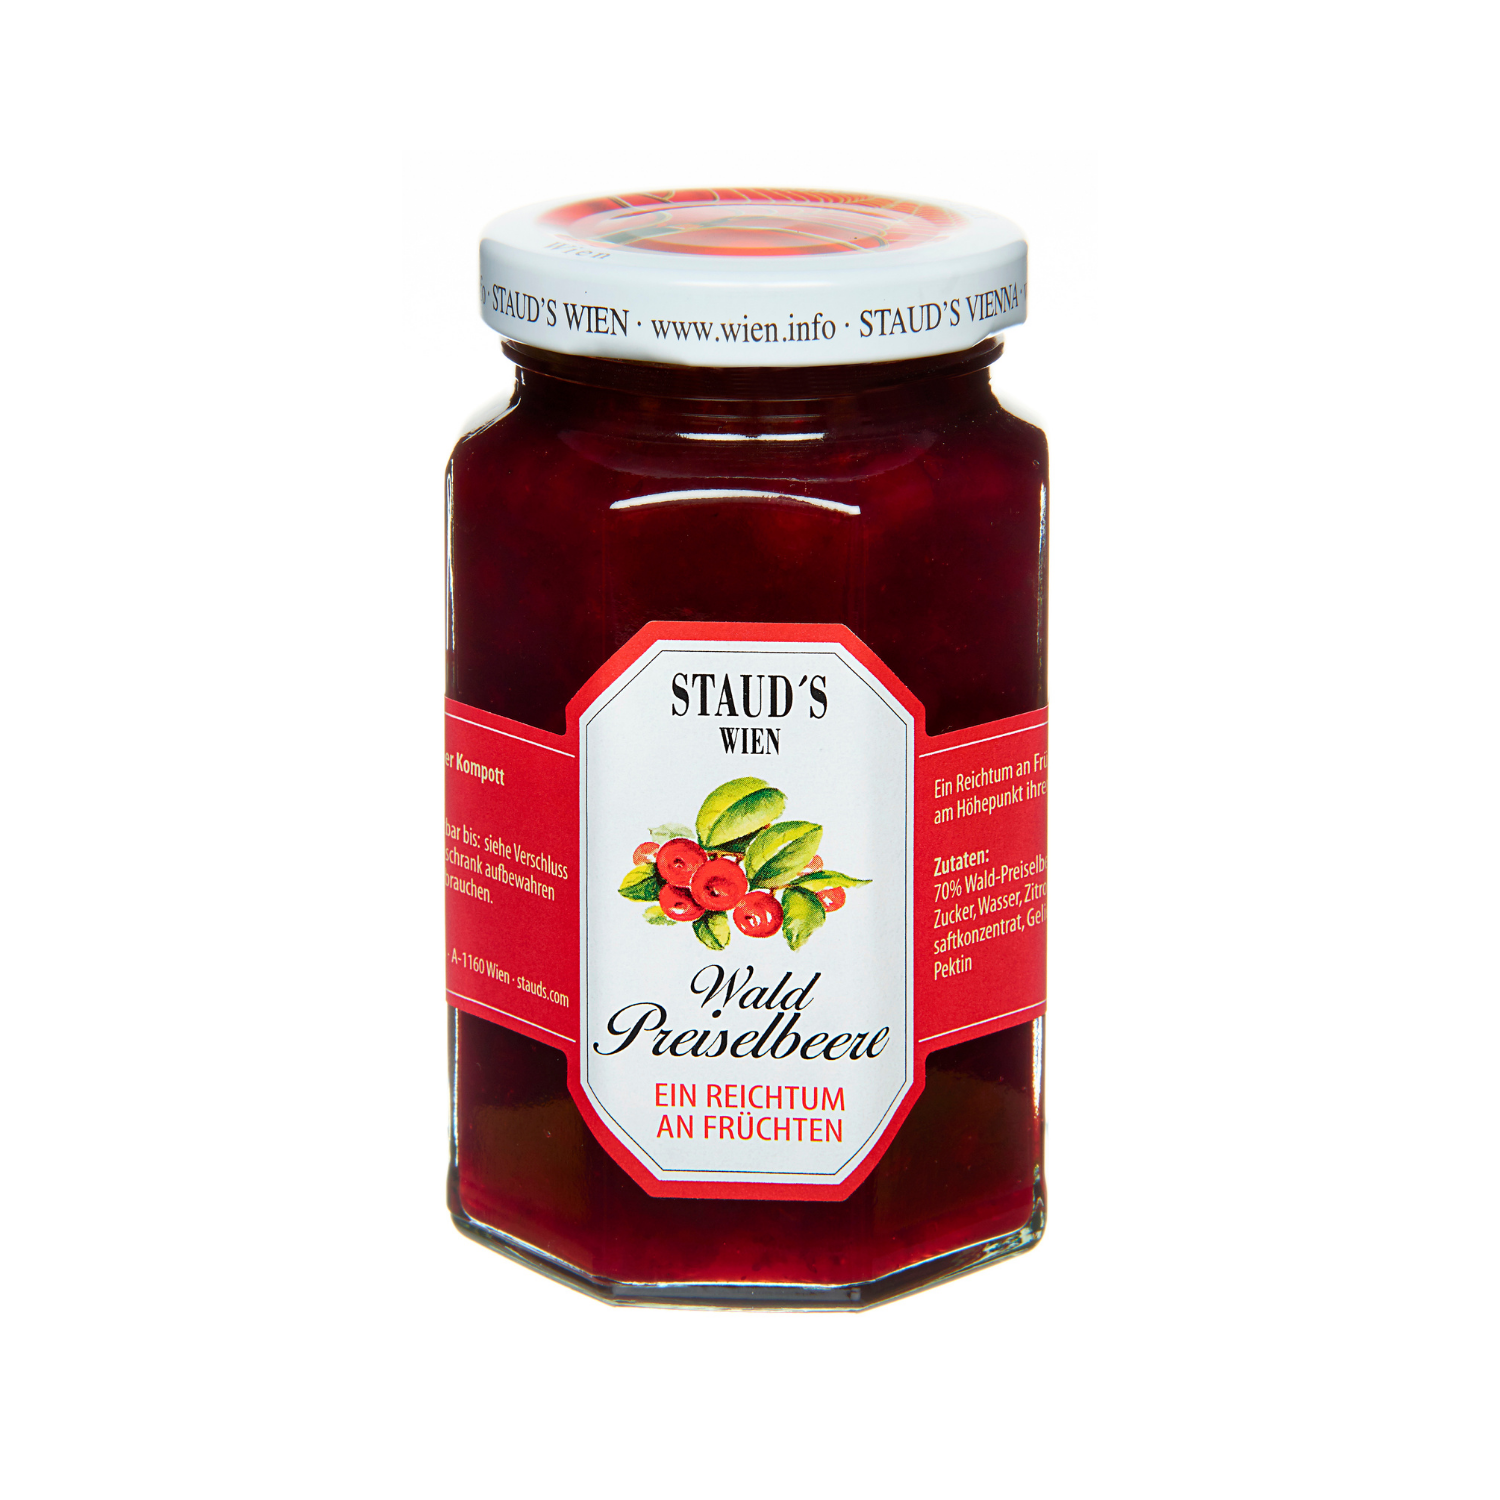 Staud's Austrian lingonberry Jam